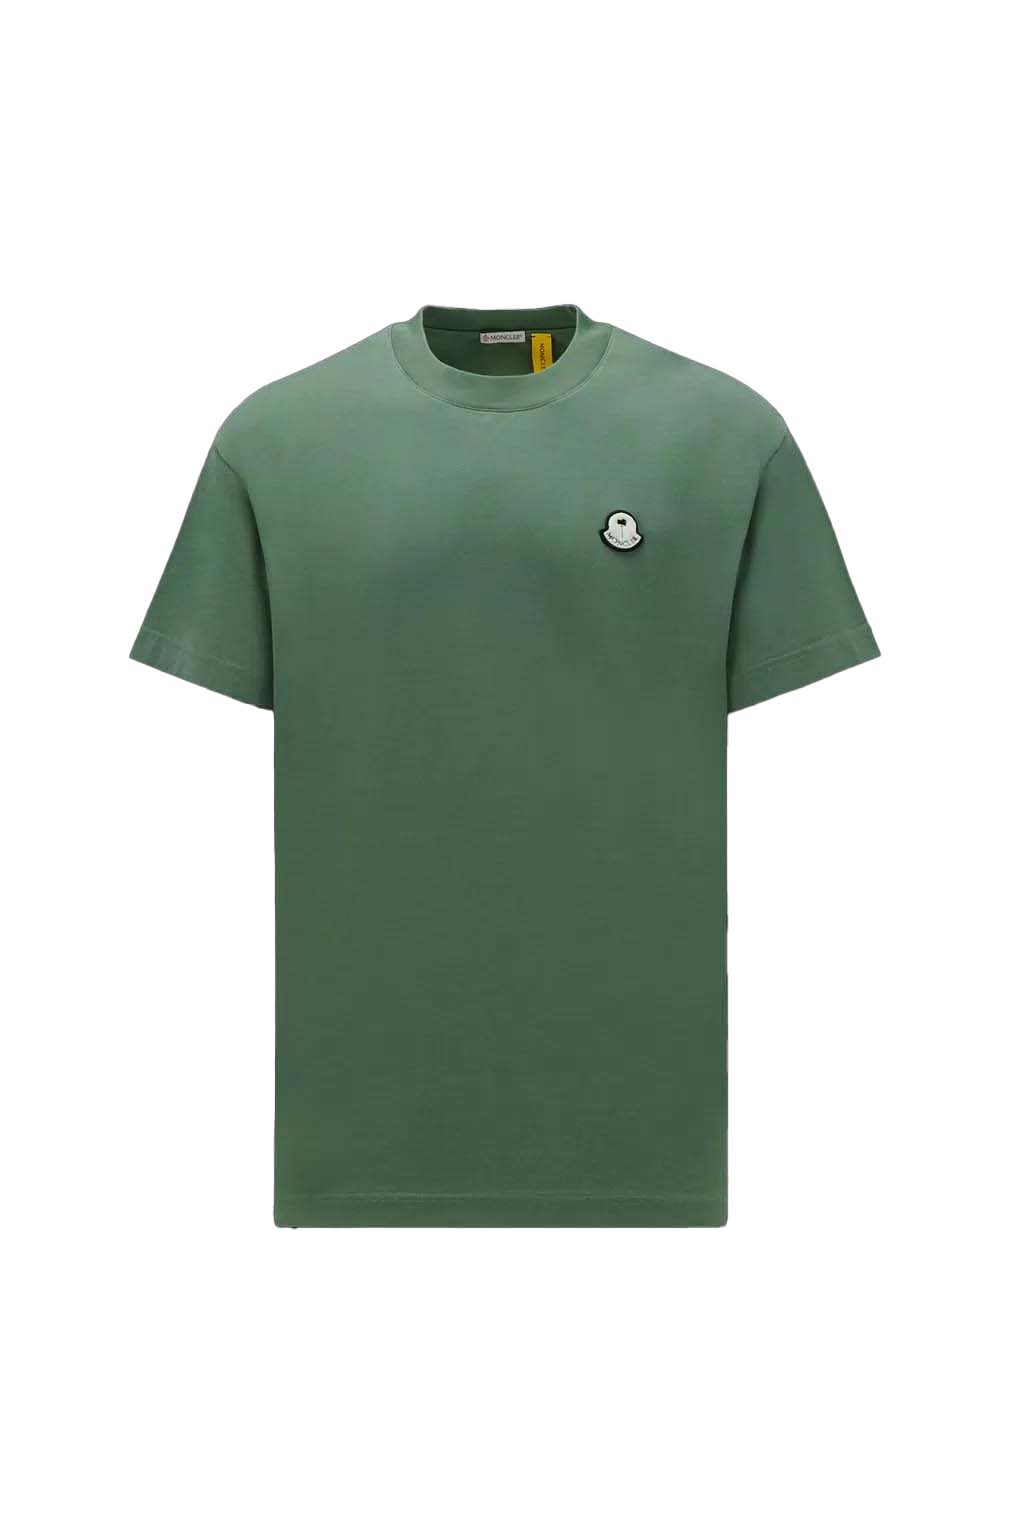 Moncler x Palm Angels Logo Patch T-Shirt Green